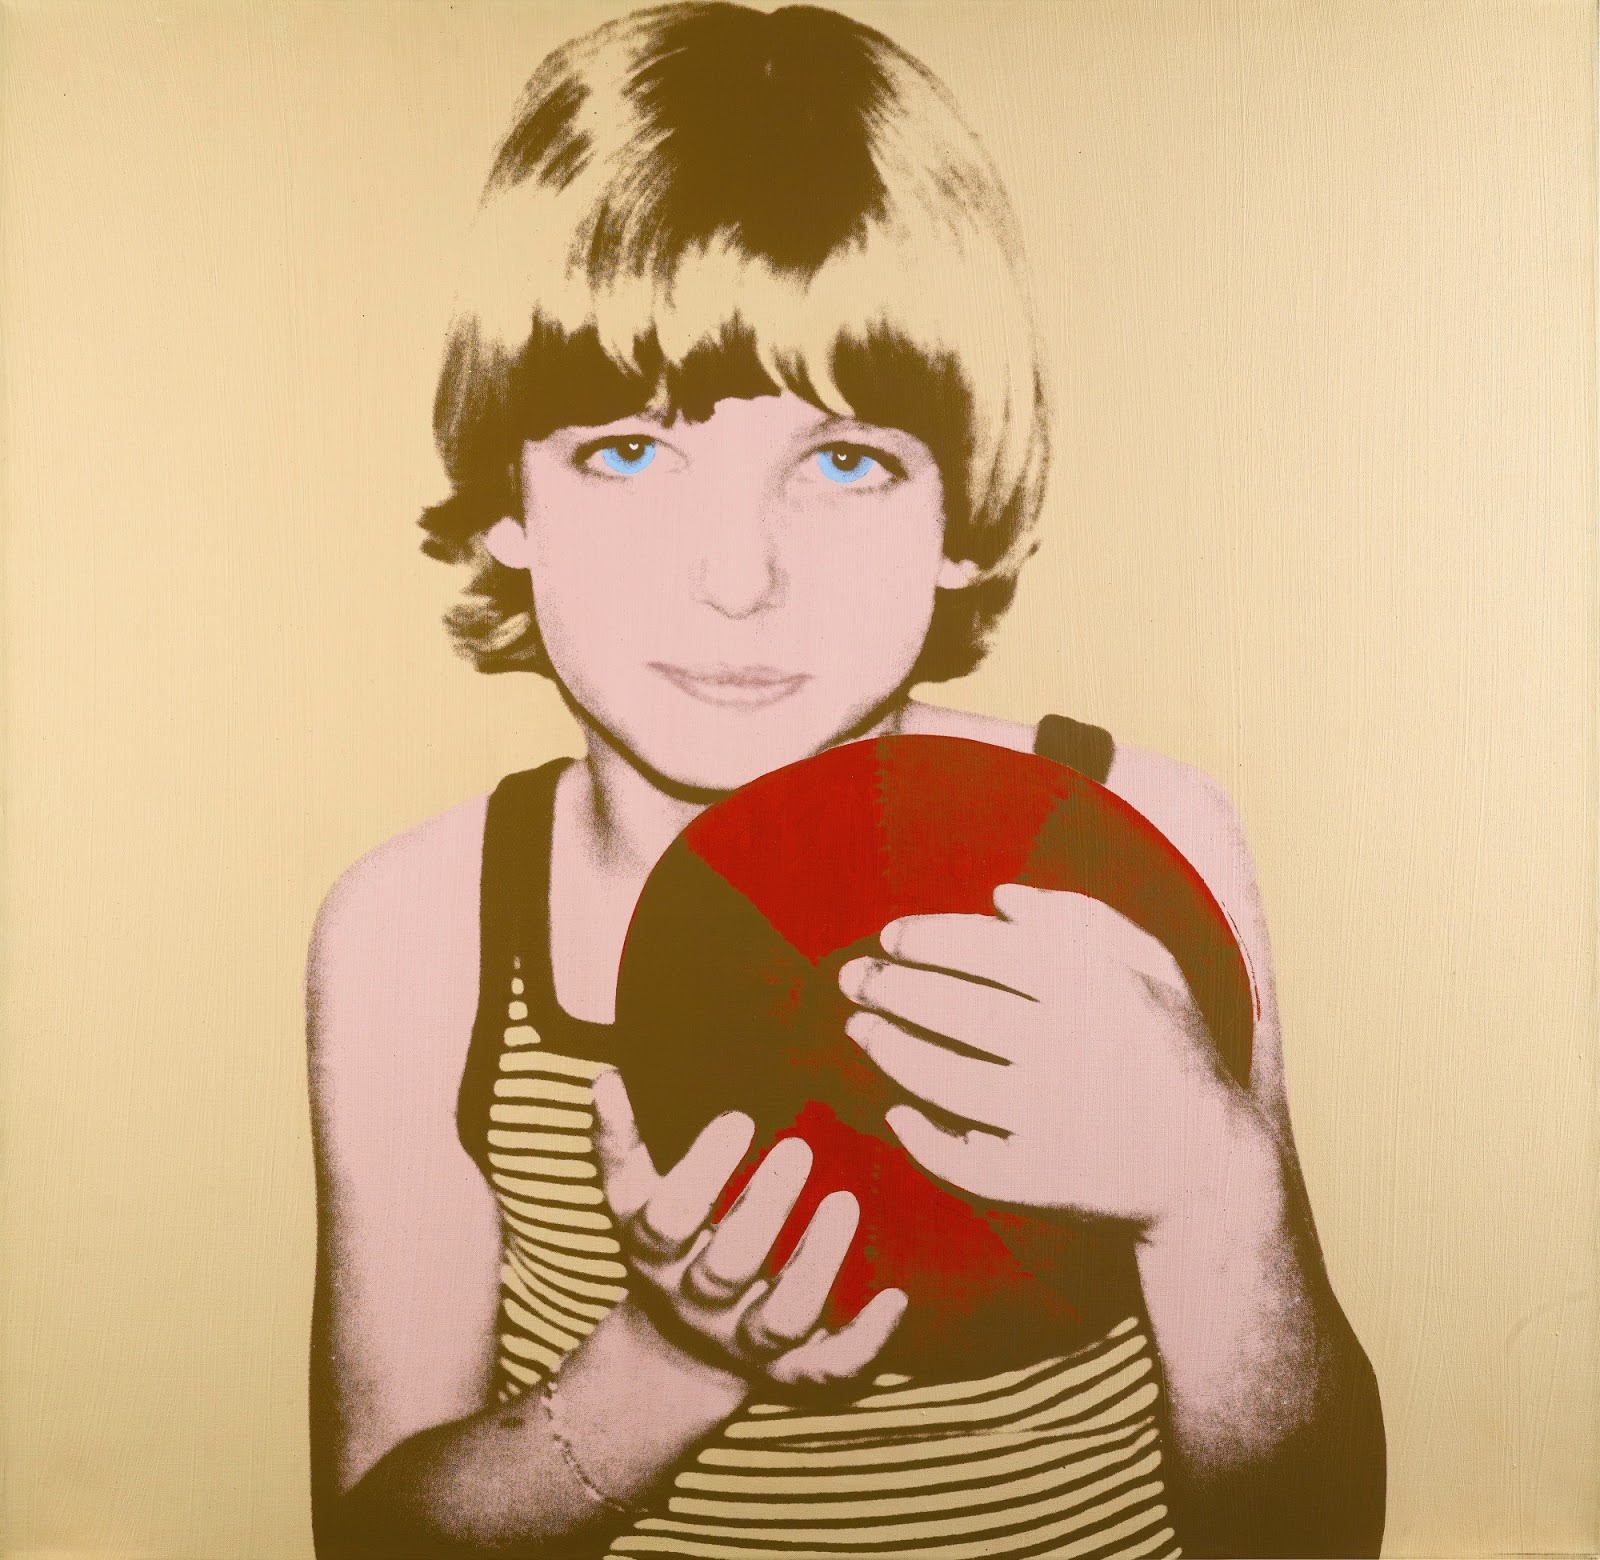 Andy+Warhol-1928-1987 (202).jpg